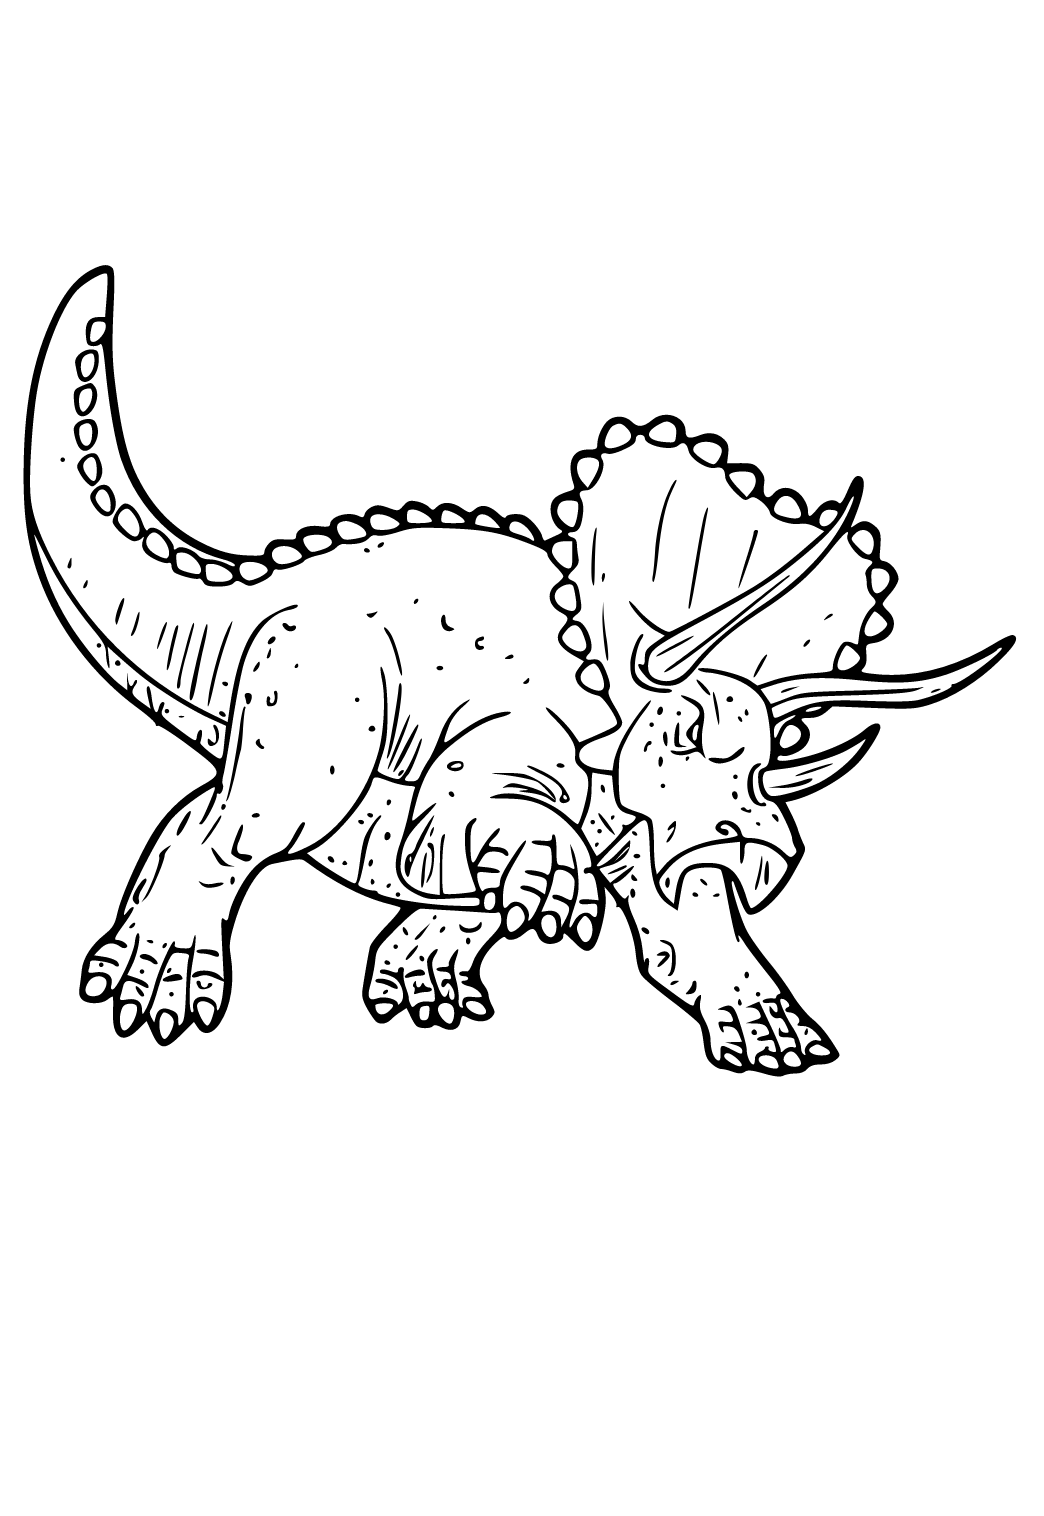 Triceratop